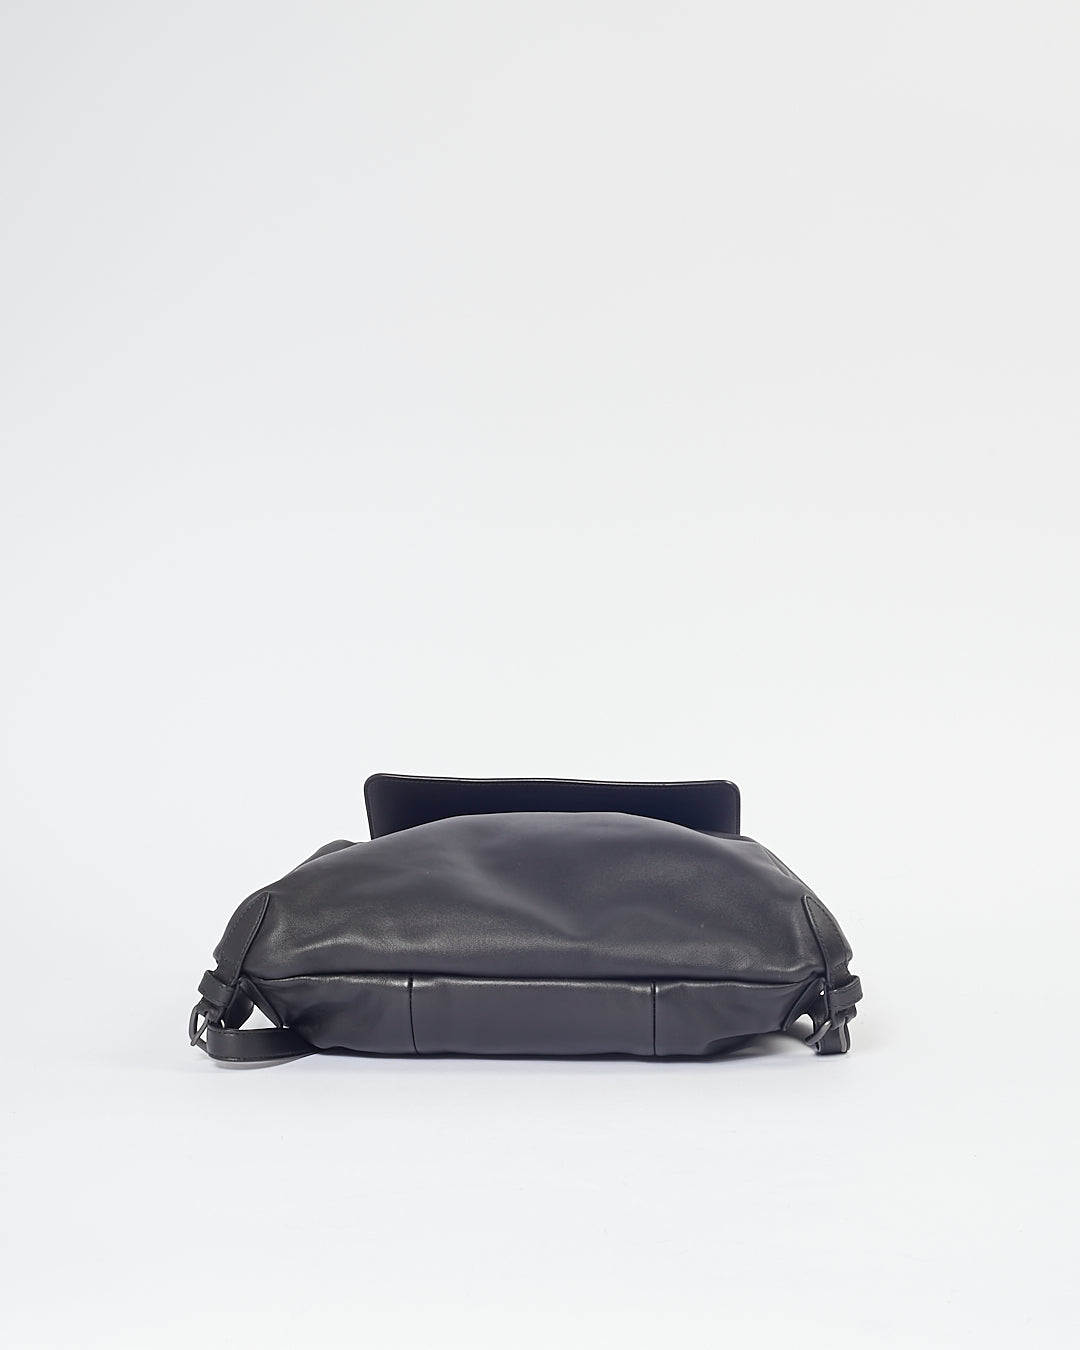 Bottega Veneta Black Leather Intrecciato Detail Backpack Bag